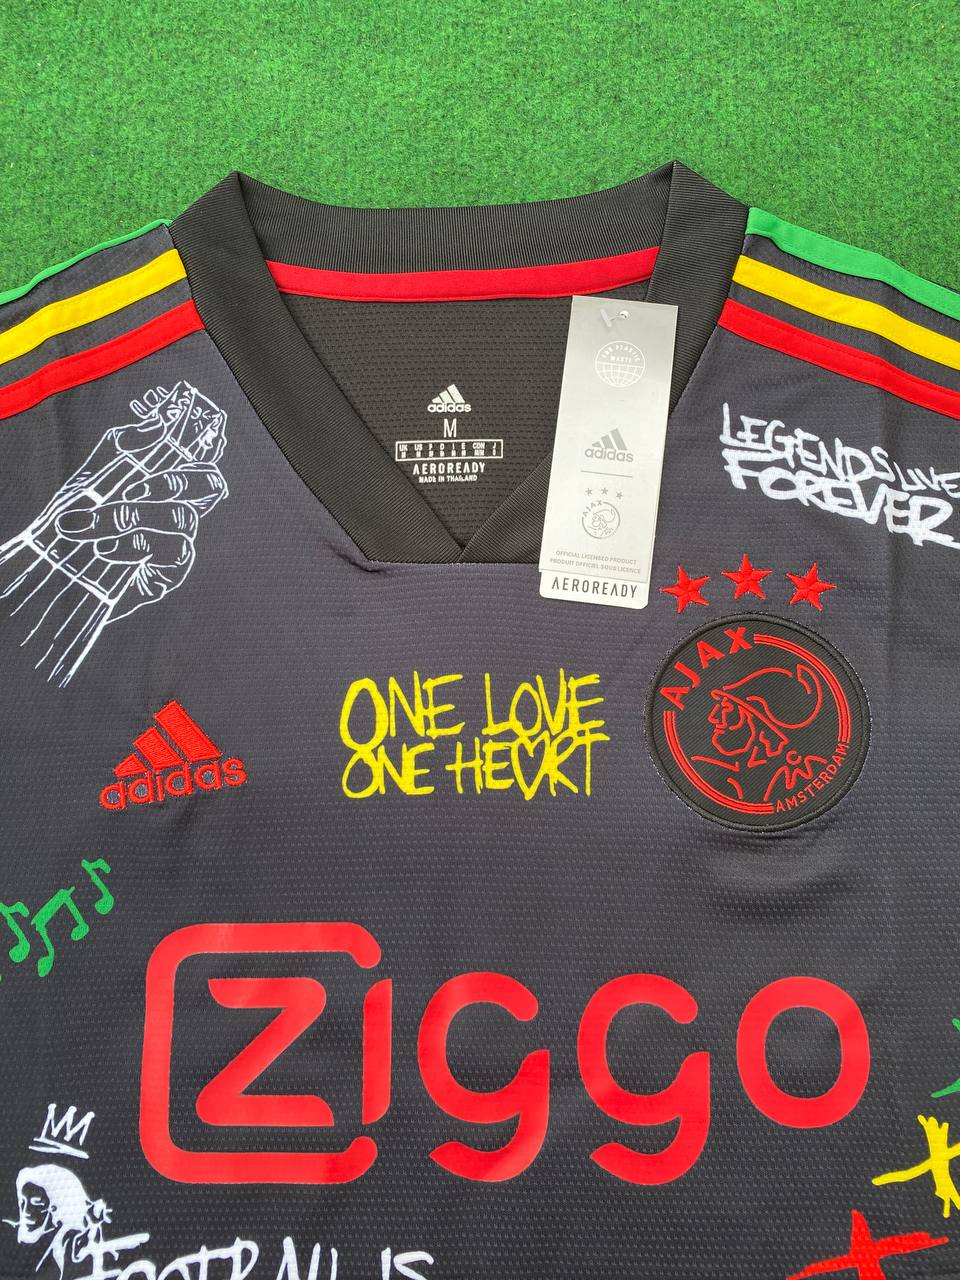 AFC Ajax x Bob Marley Üç Küçük Kuşlar Hatıra Özel Üretim Futbol Forması Maillot Trikot Maglia Camiseta